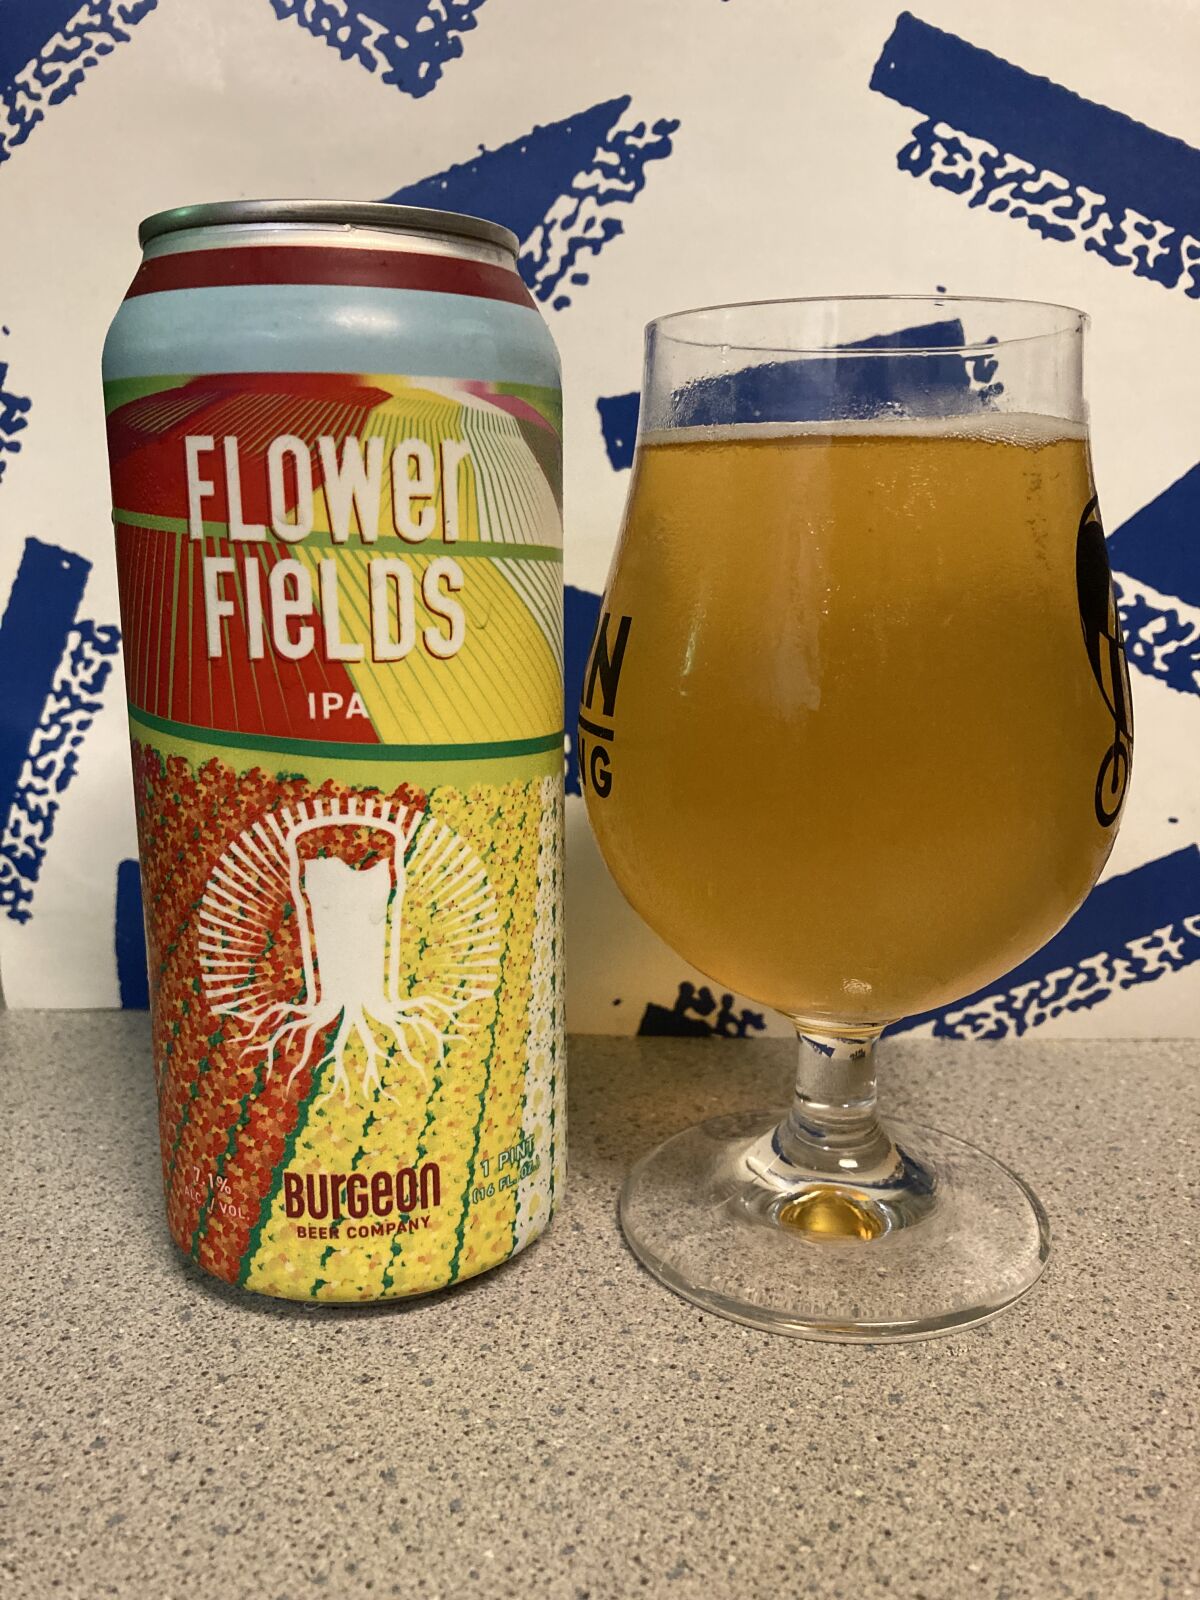 Flower Fields, an IPA from Burgeon Beer Company